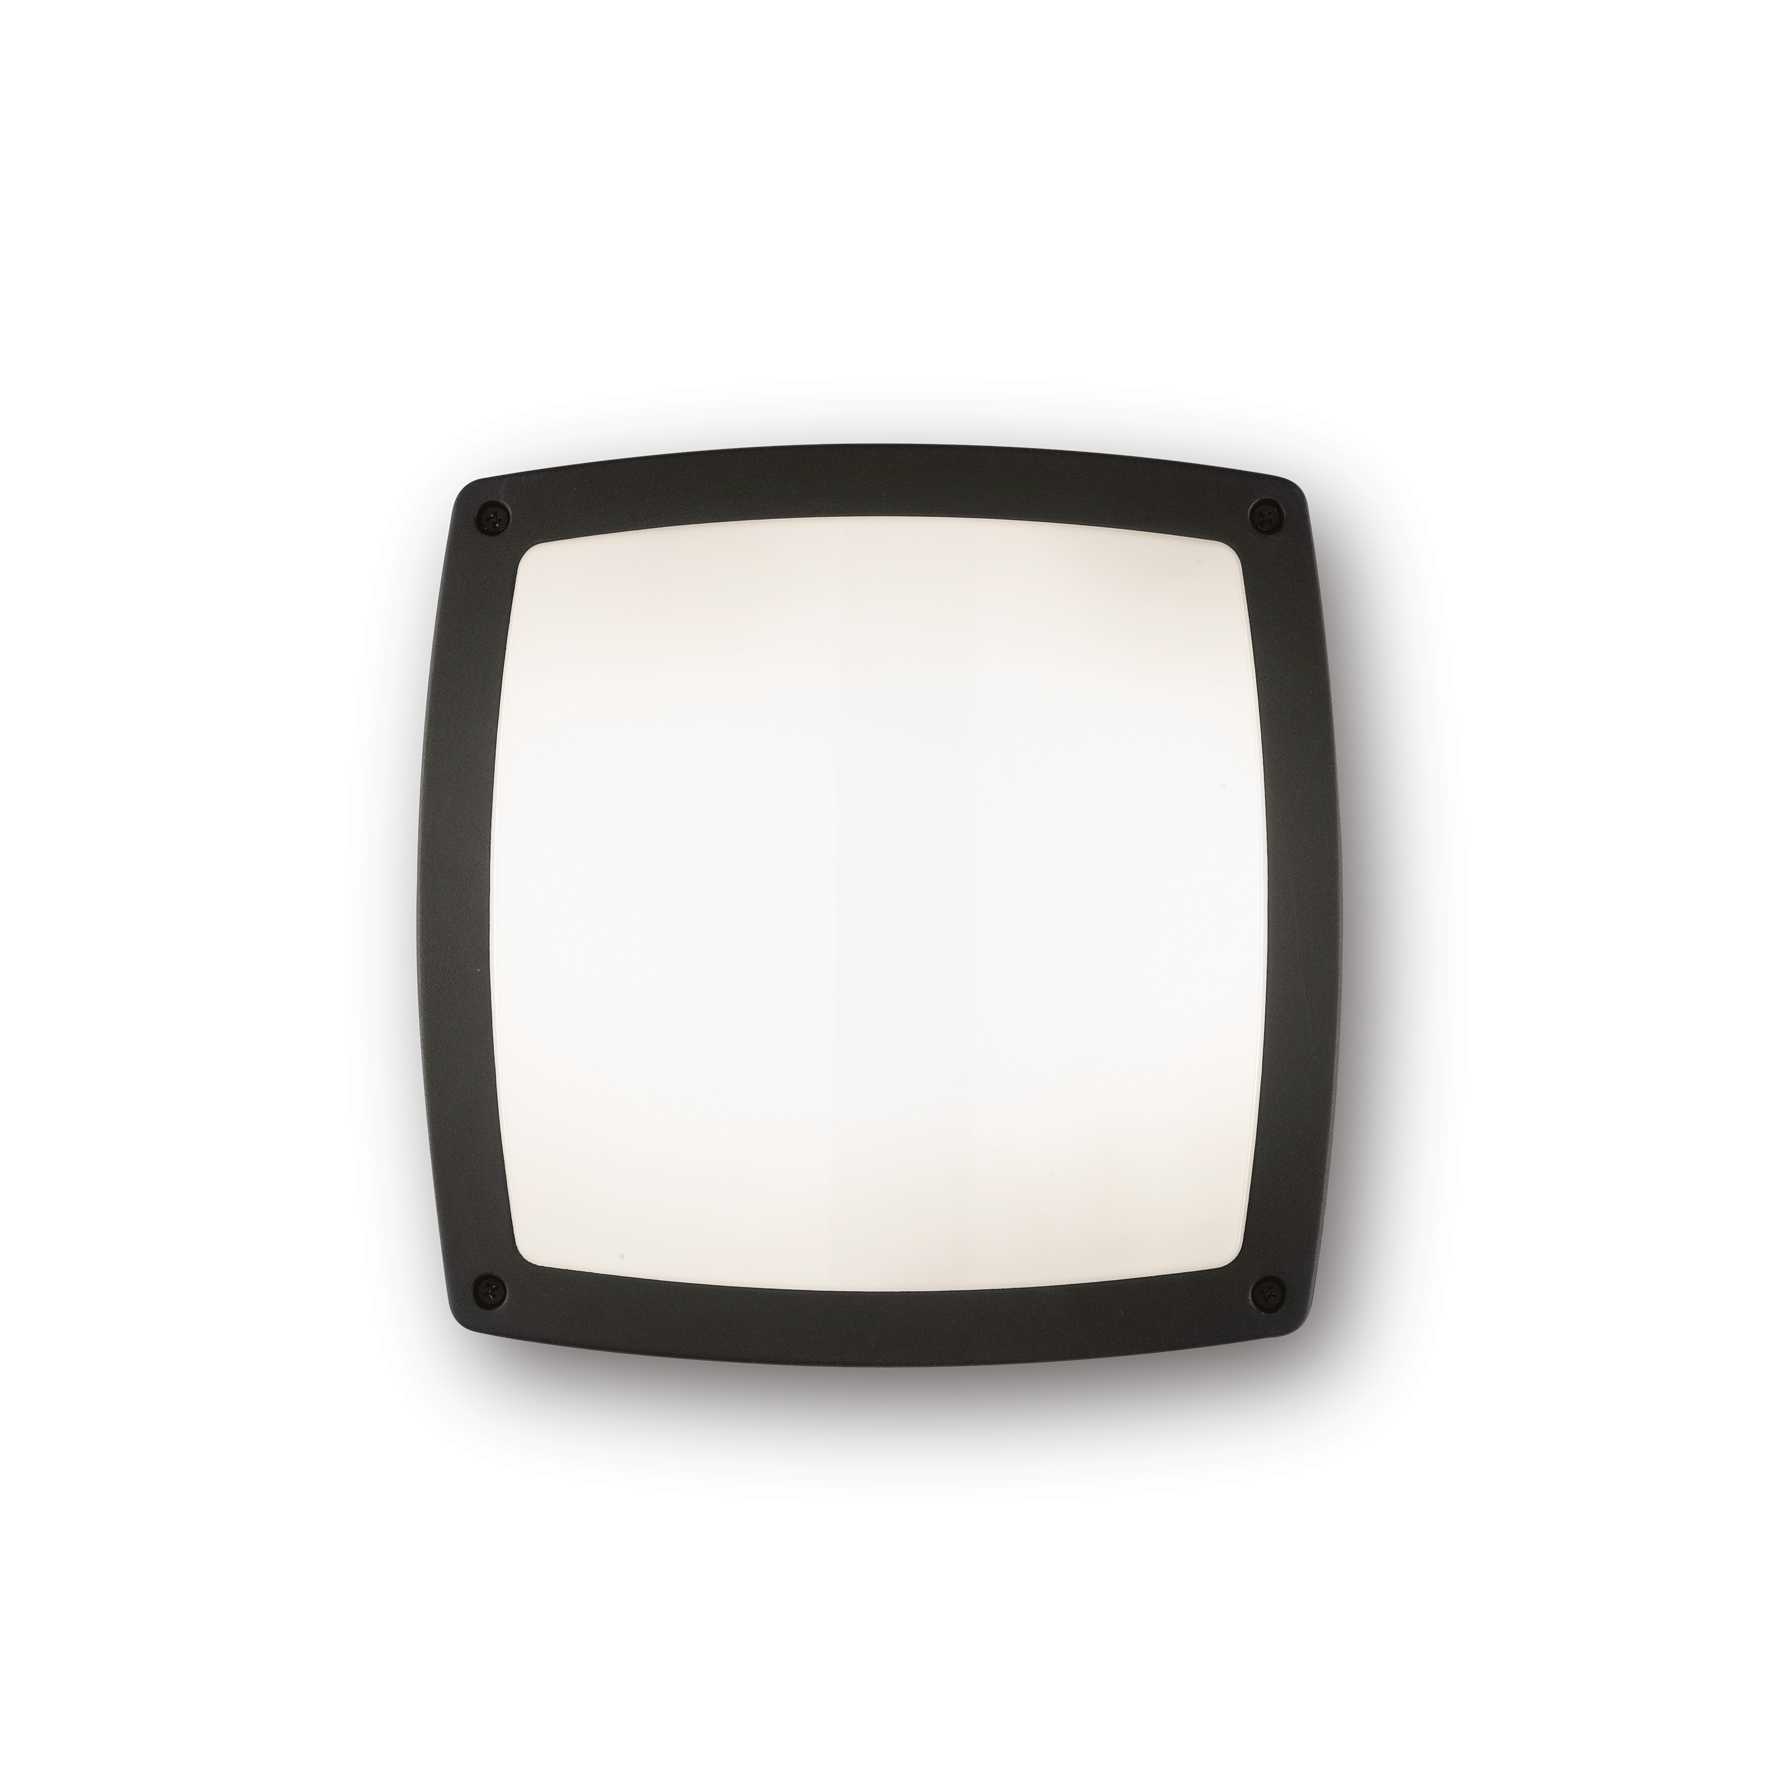 AD hotelska oprema Vanjska zidna lampa Cometa ap3- Crne boje slika proizvoda